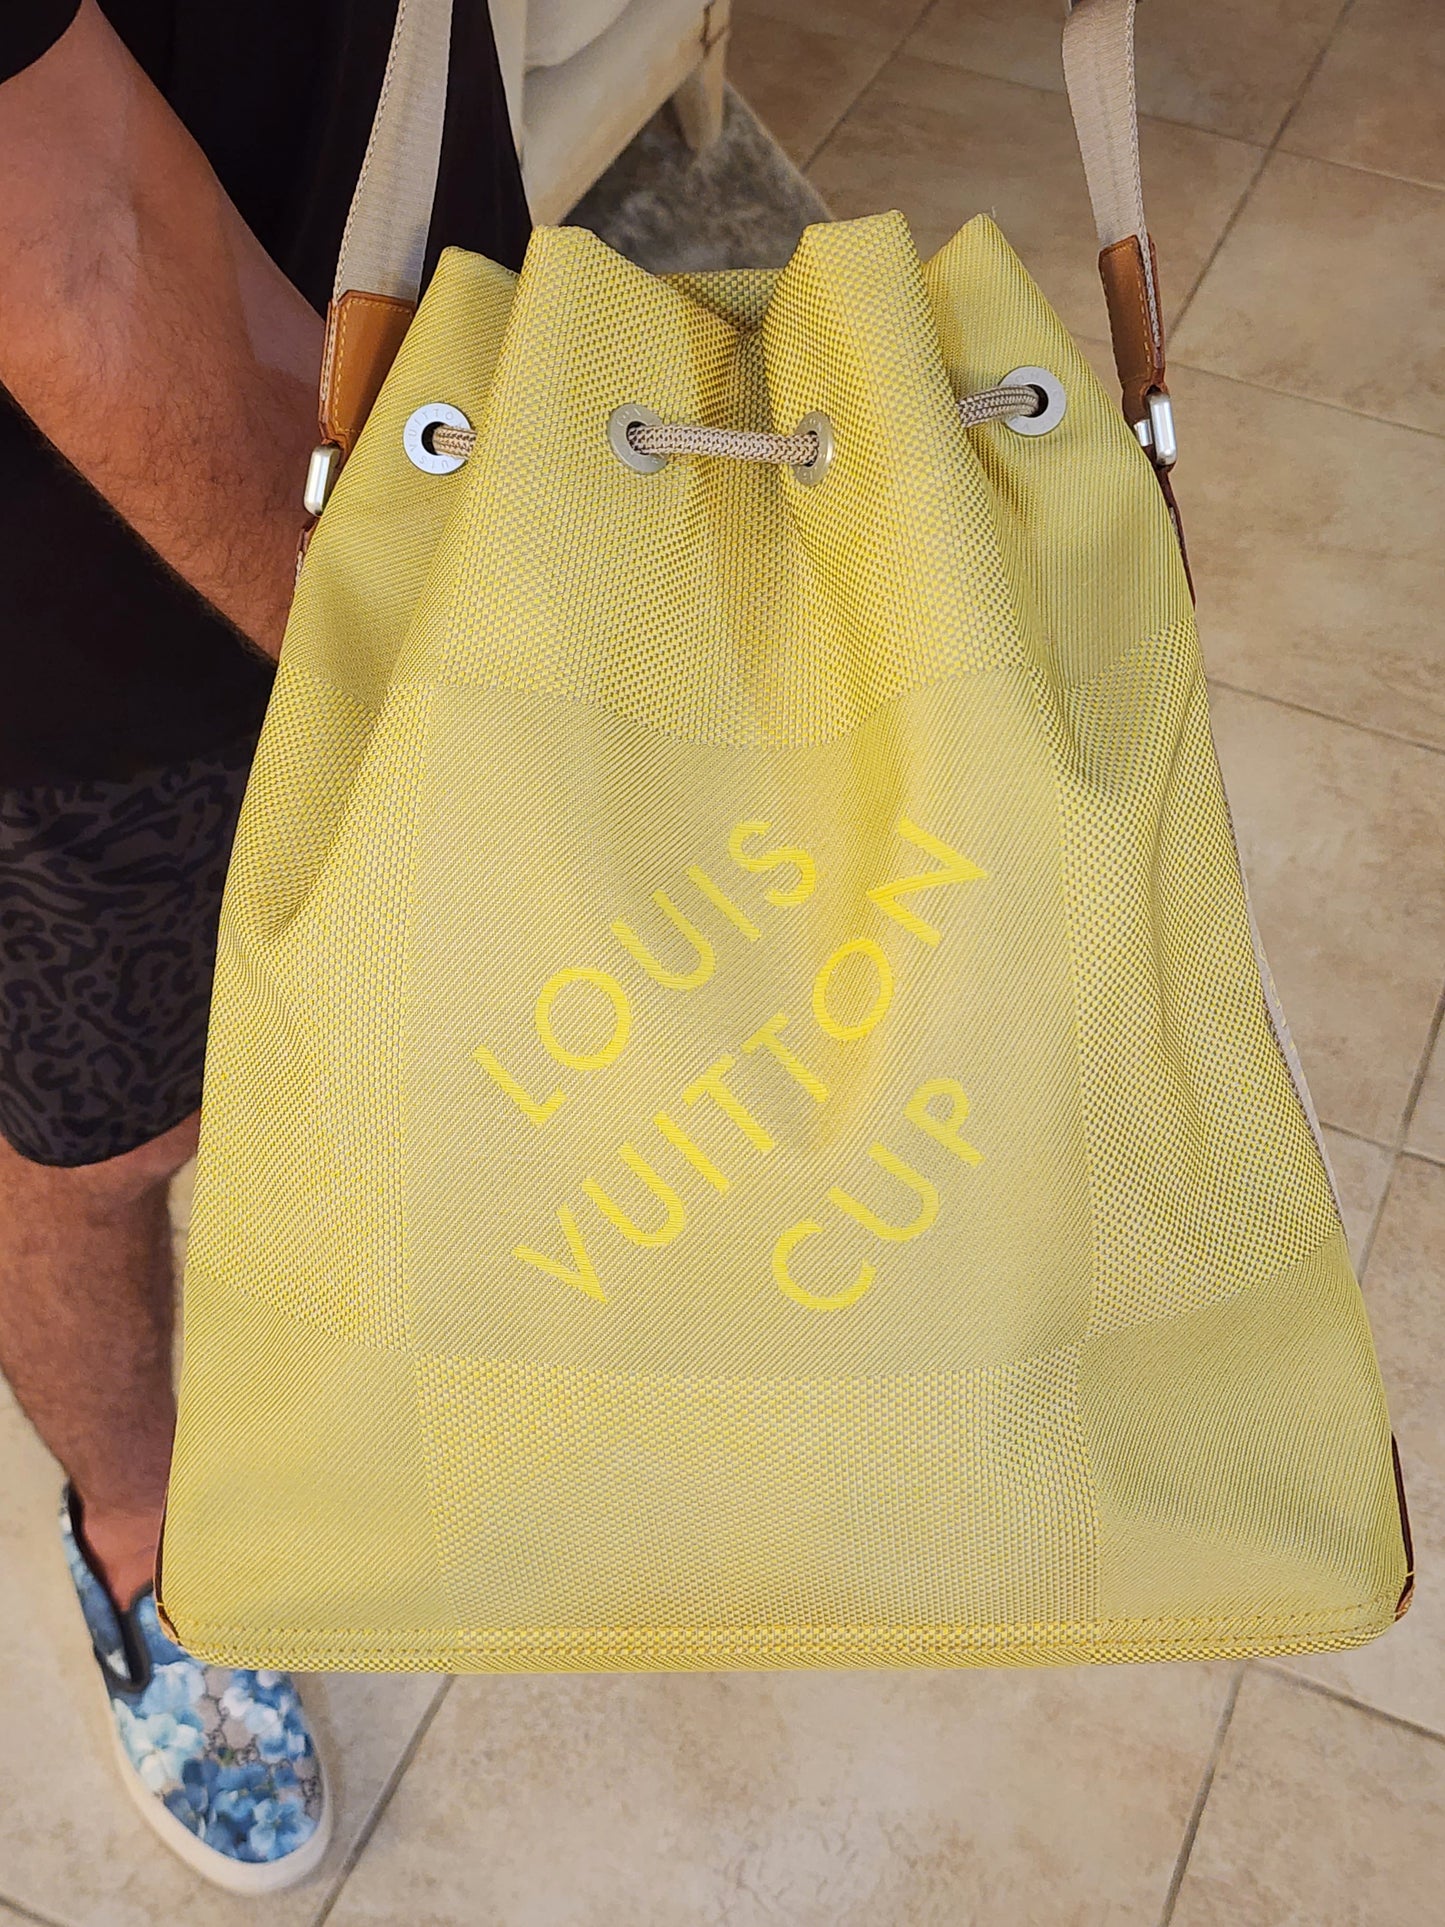 LOUIS VUITTON
Damier Geant Americas Cup Volunteer Bag in Yellow